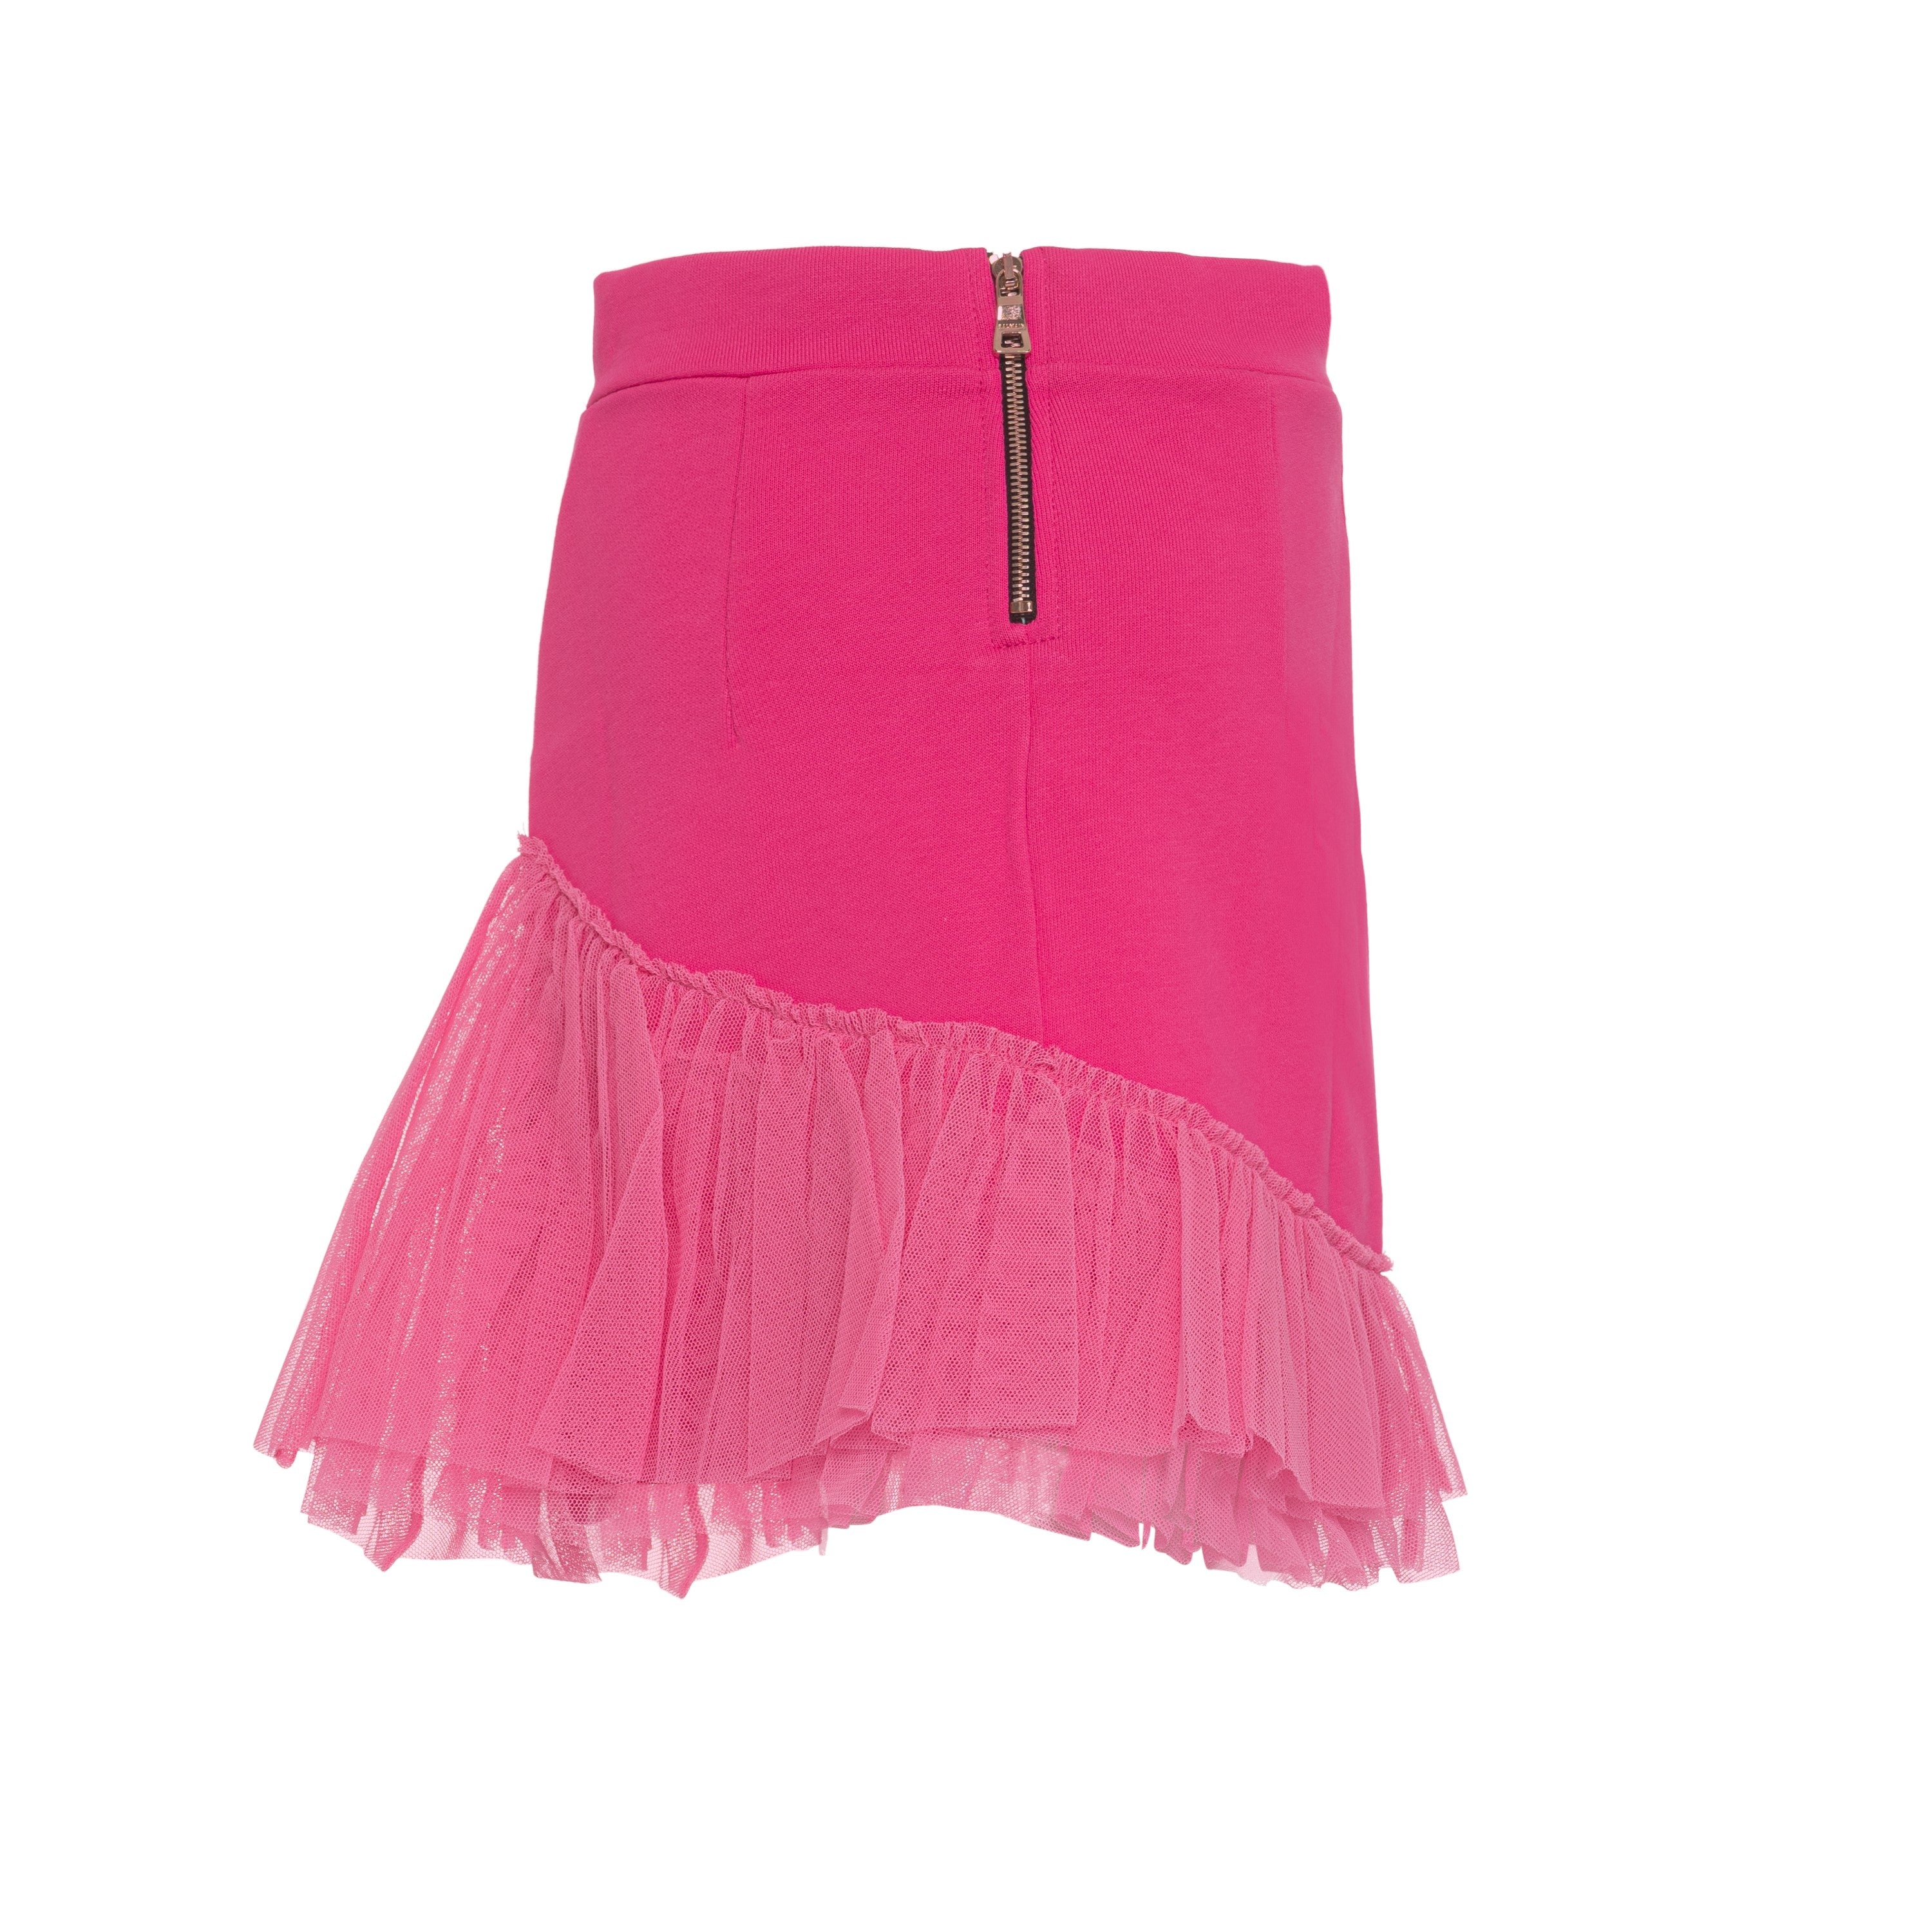 Skirt 10 Prugna/rosa